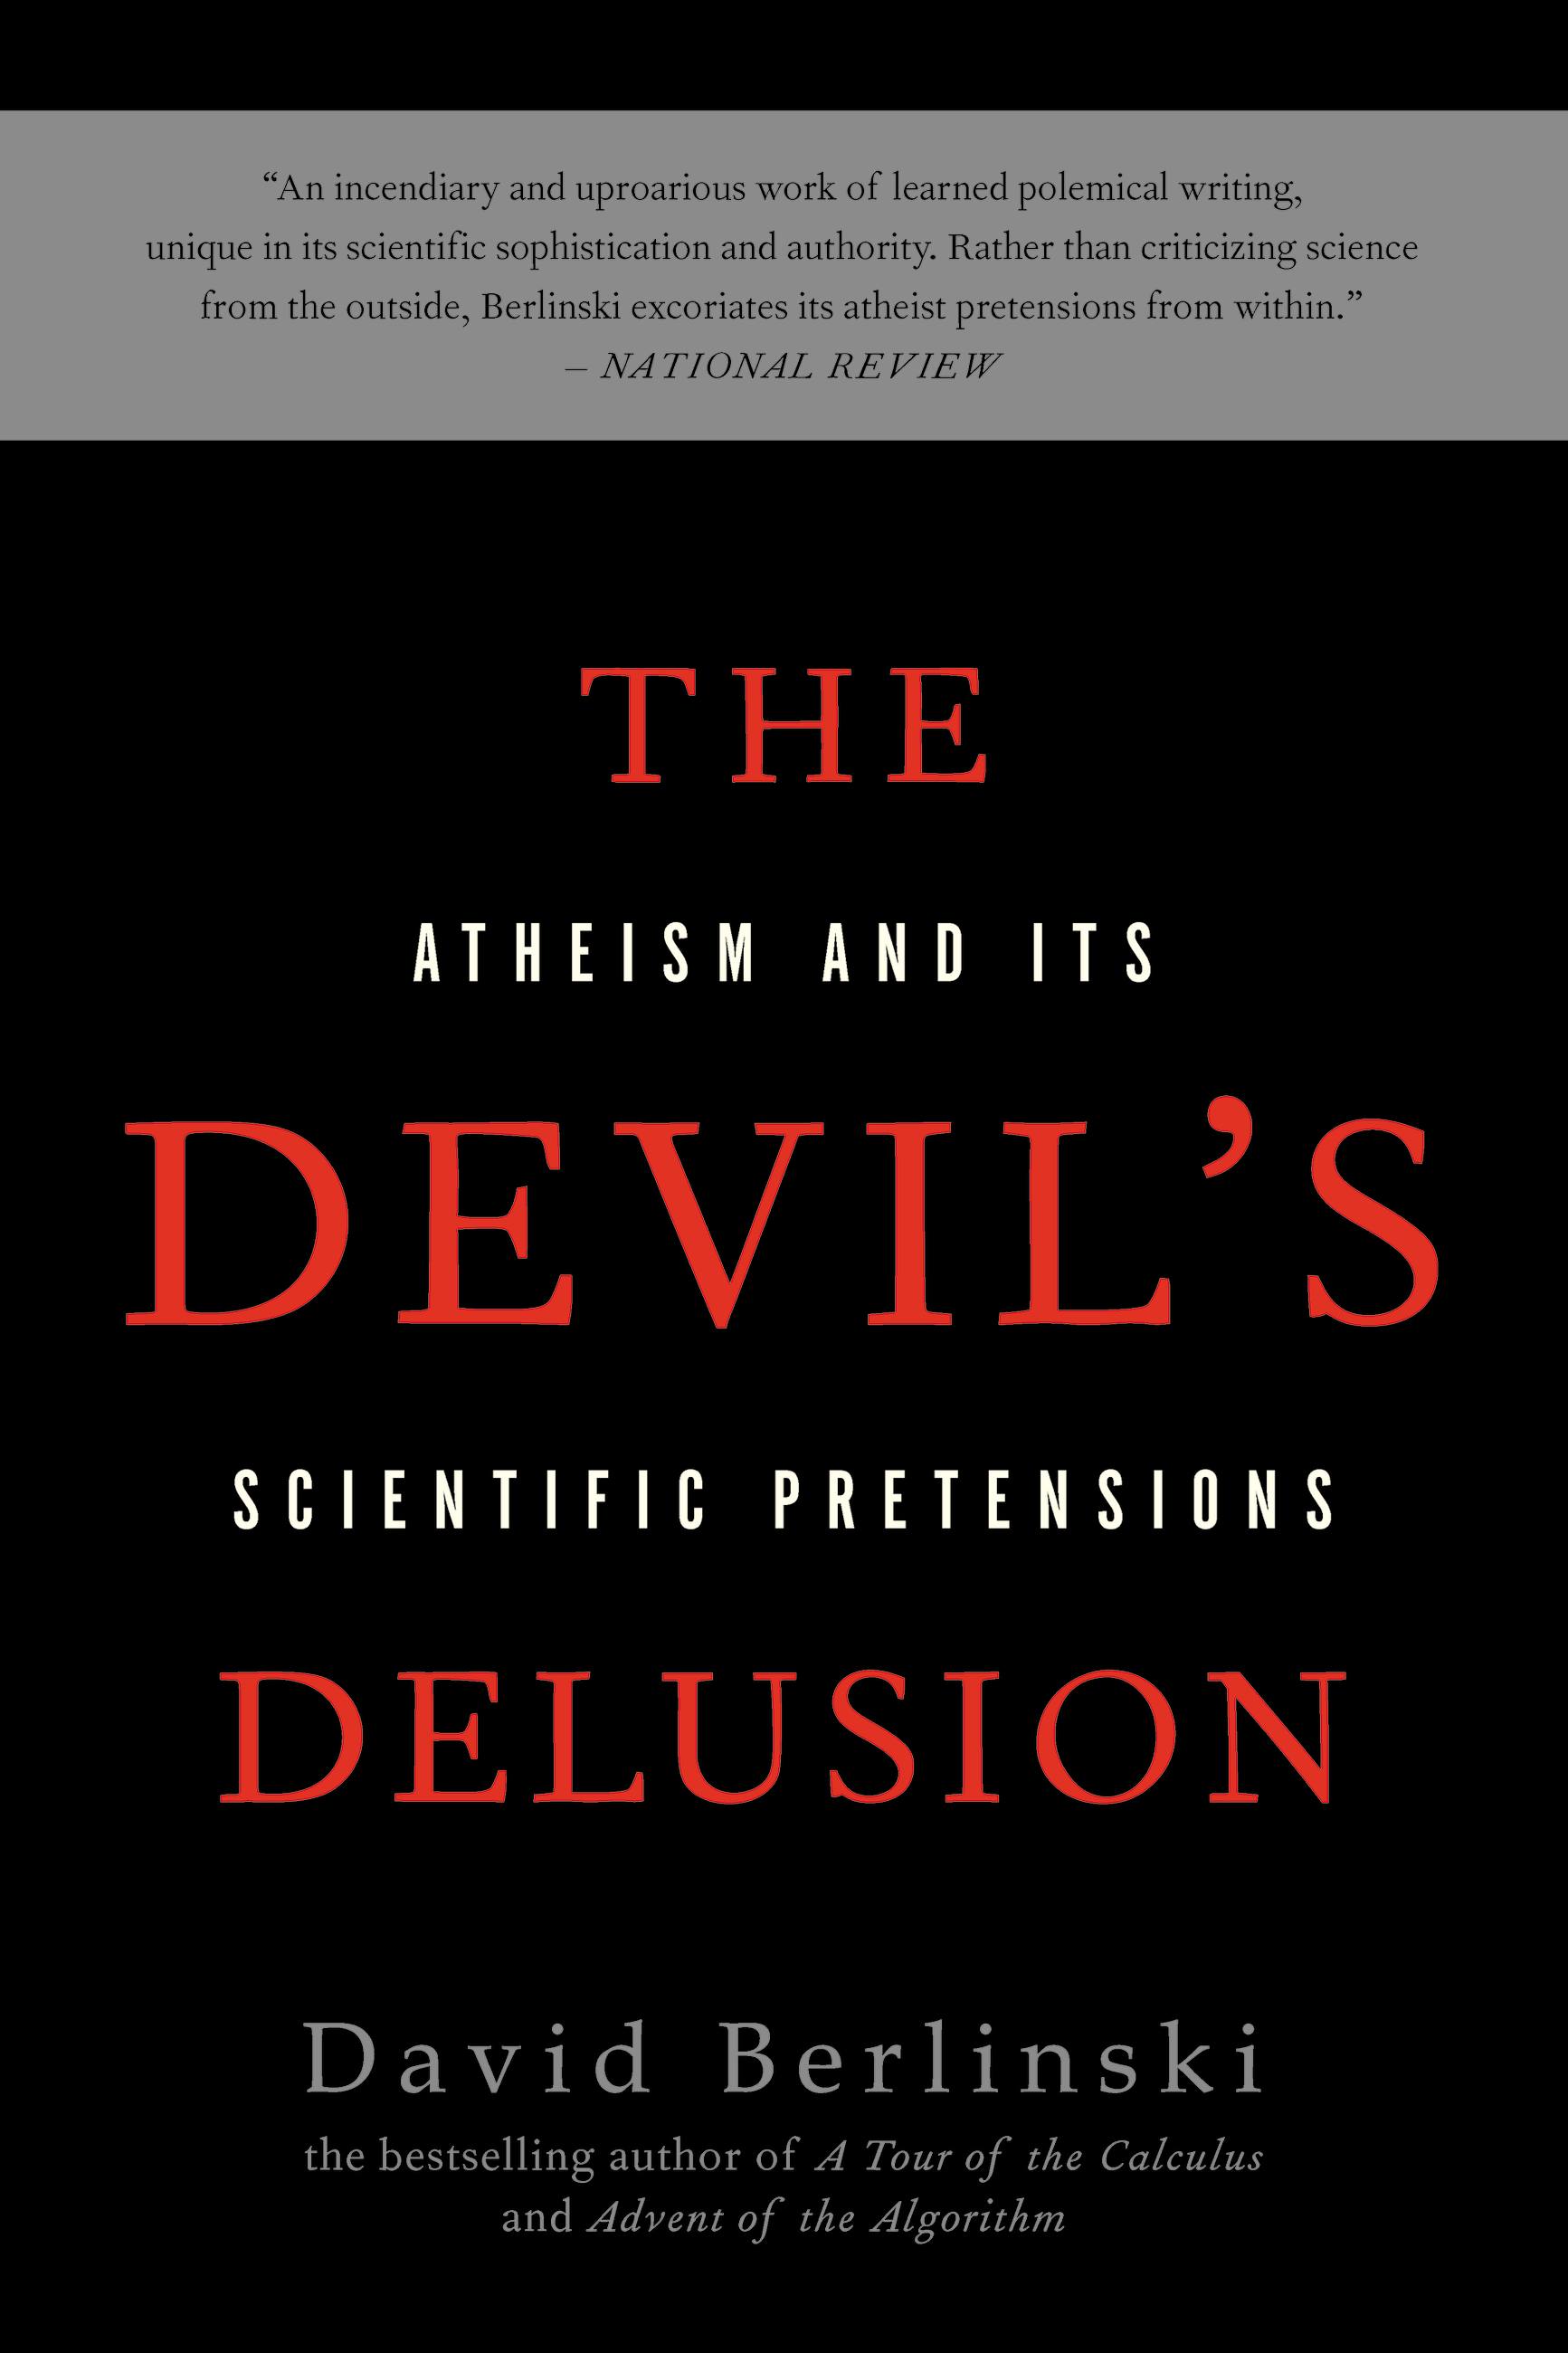 The Devil's Delusion by David Berlinski | Hachette Book Group